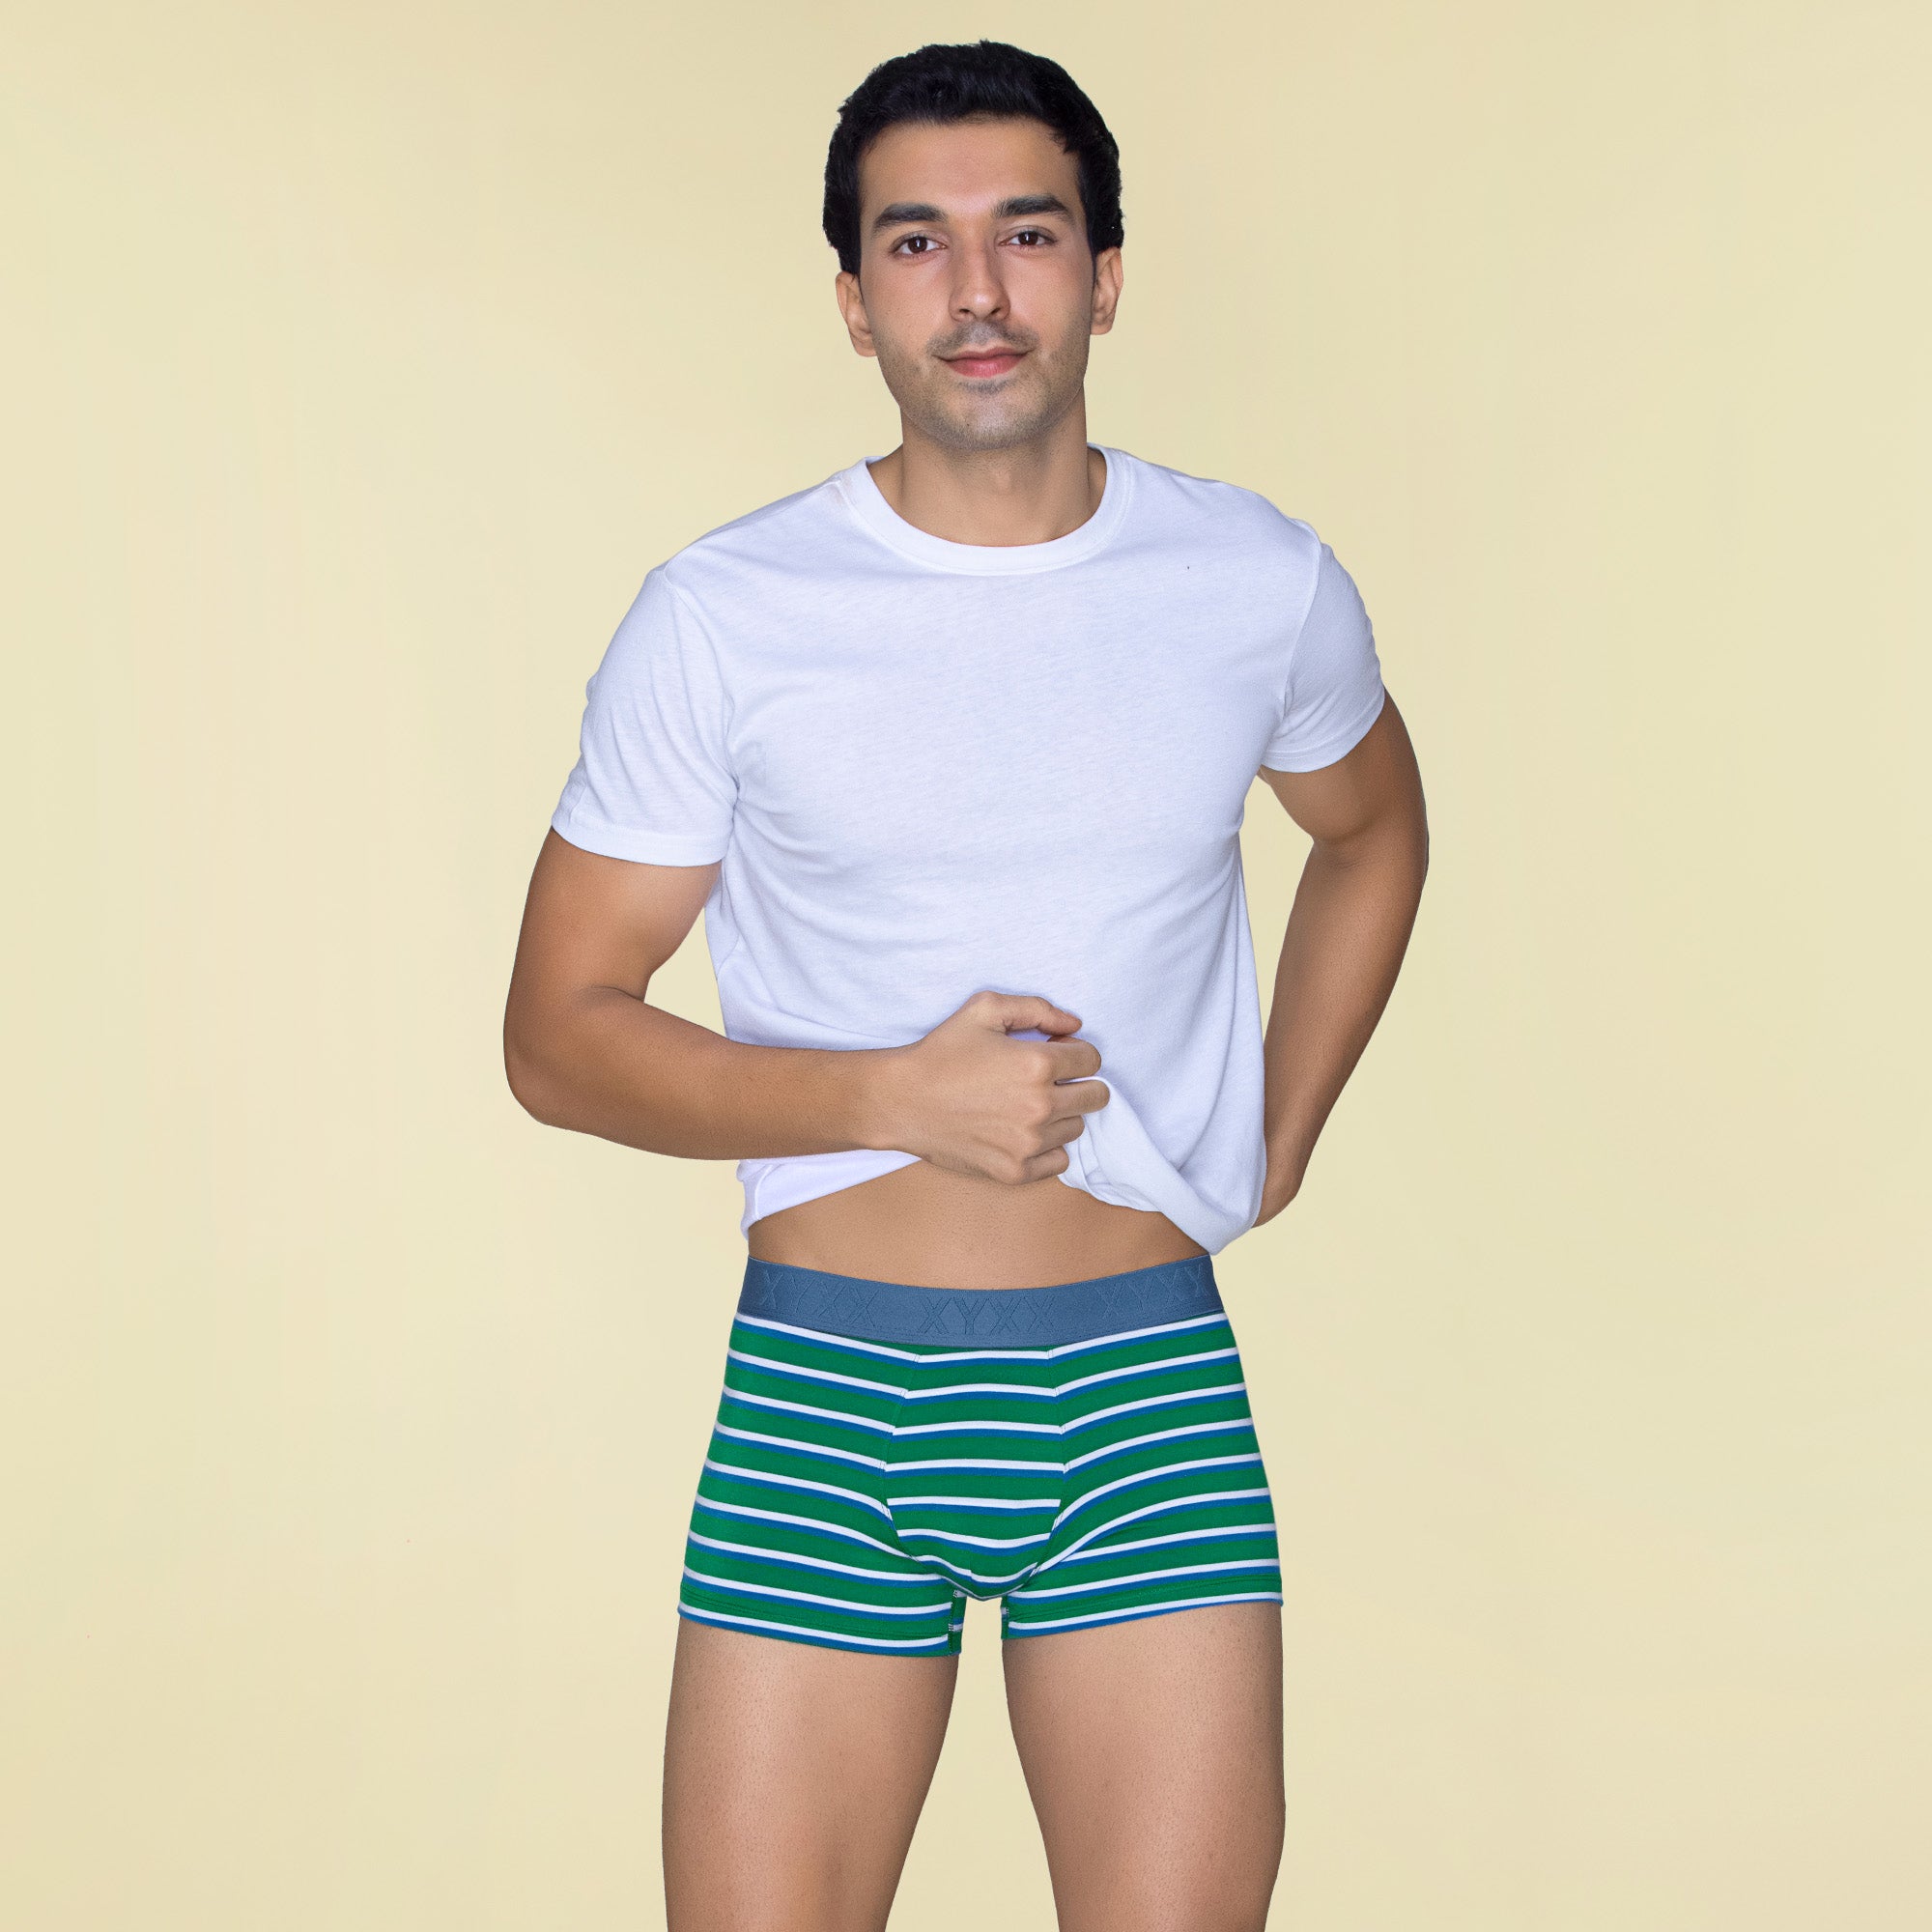 Striped XYXX Linea Micro Modal Premium Brief Underwear For Men, Type: Briefs  at Rs 230/piece in Surat